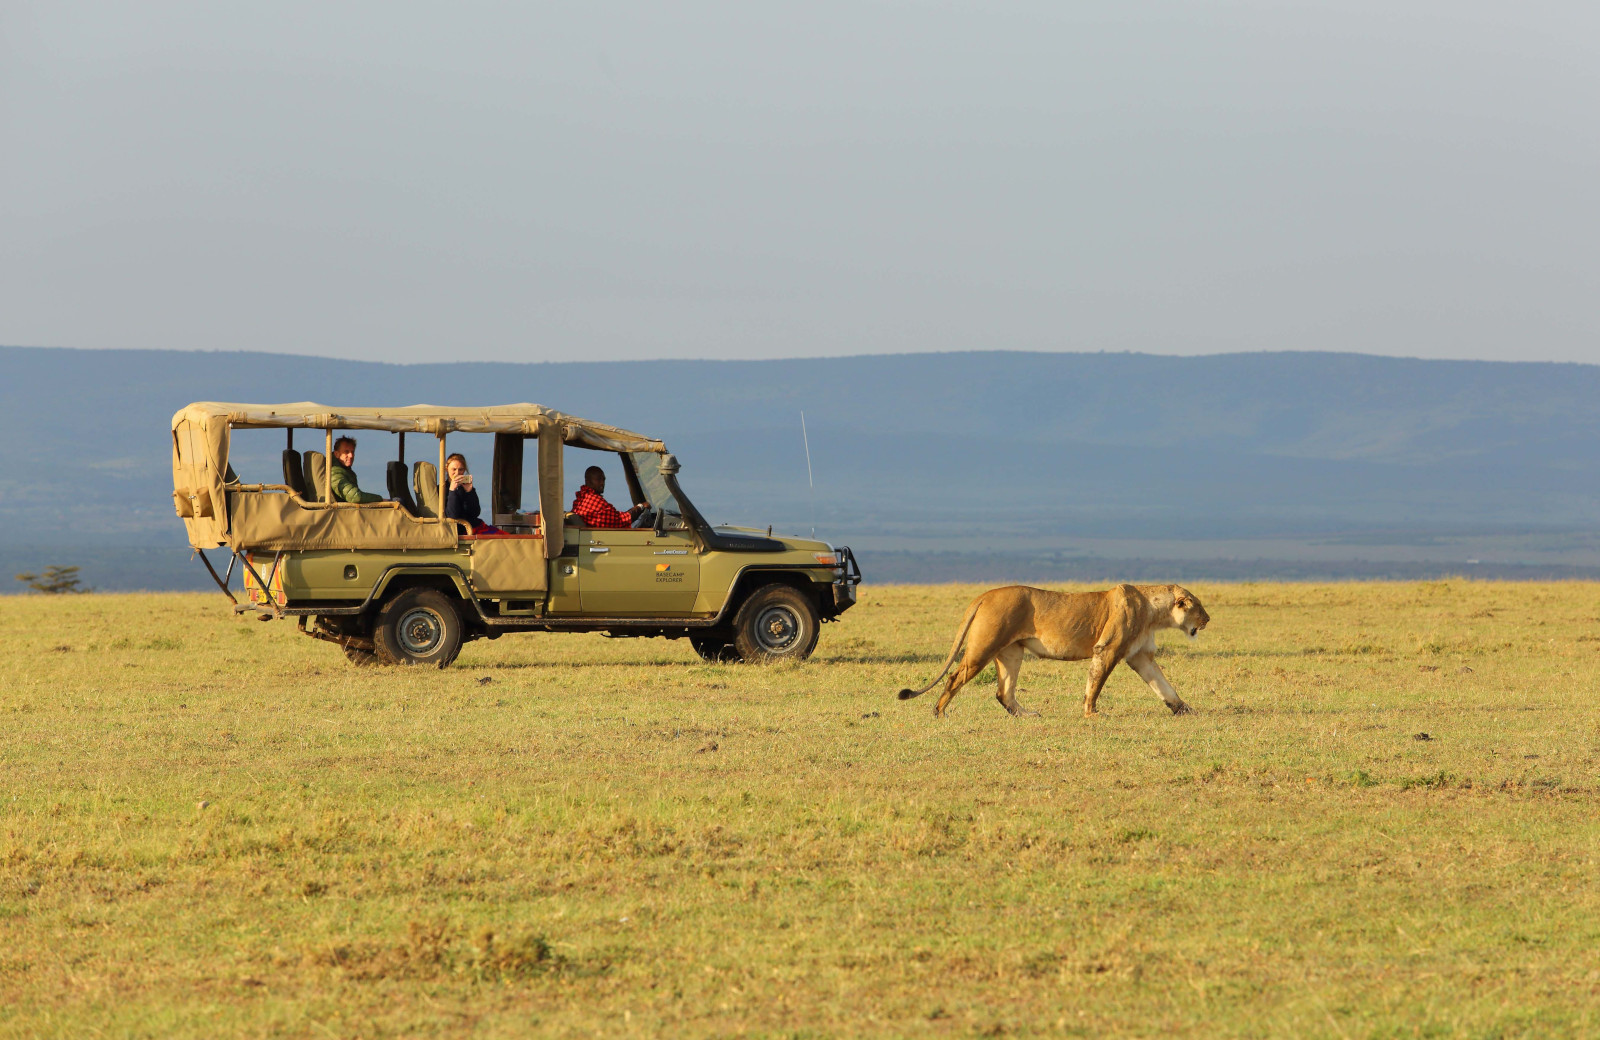 How To Get To Masai Mara